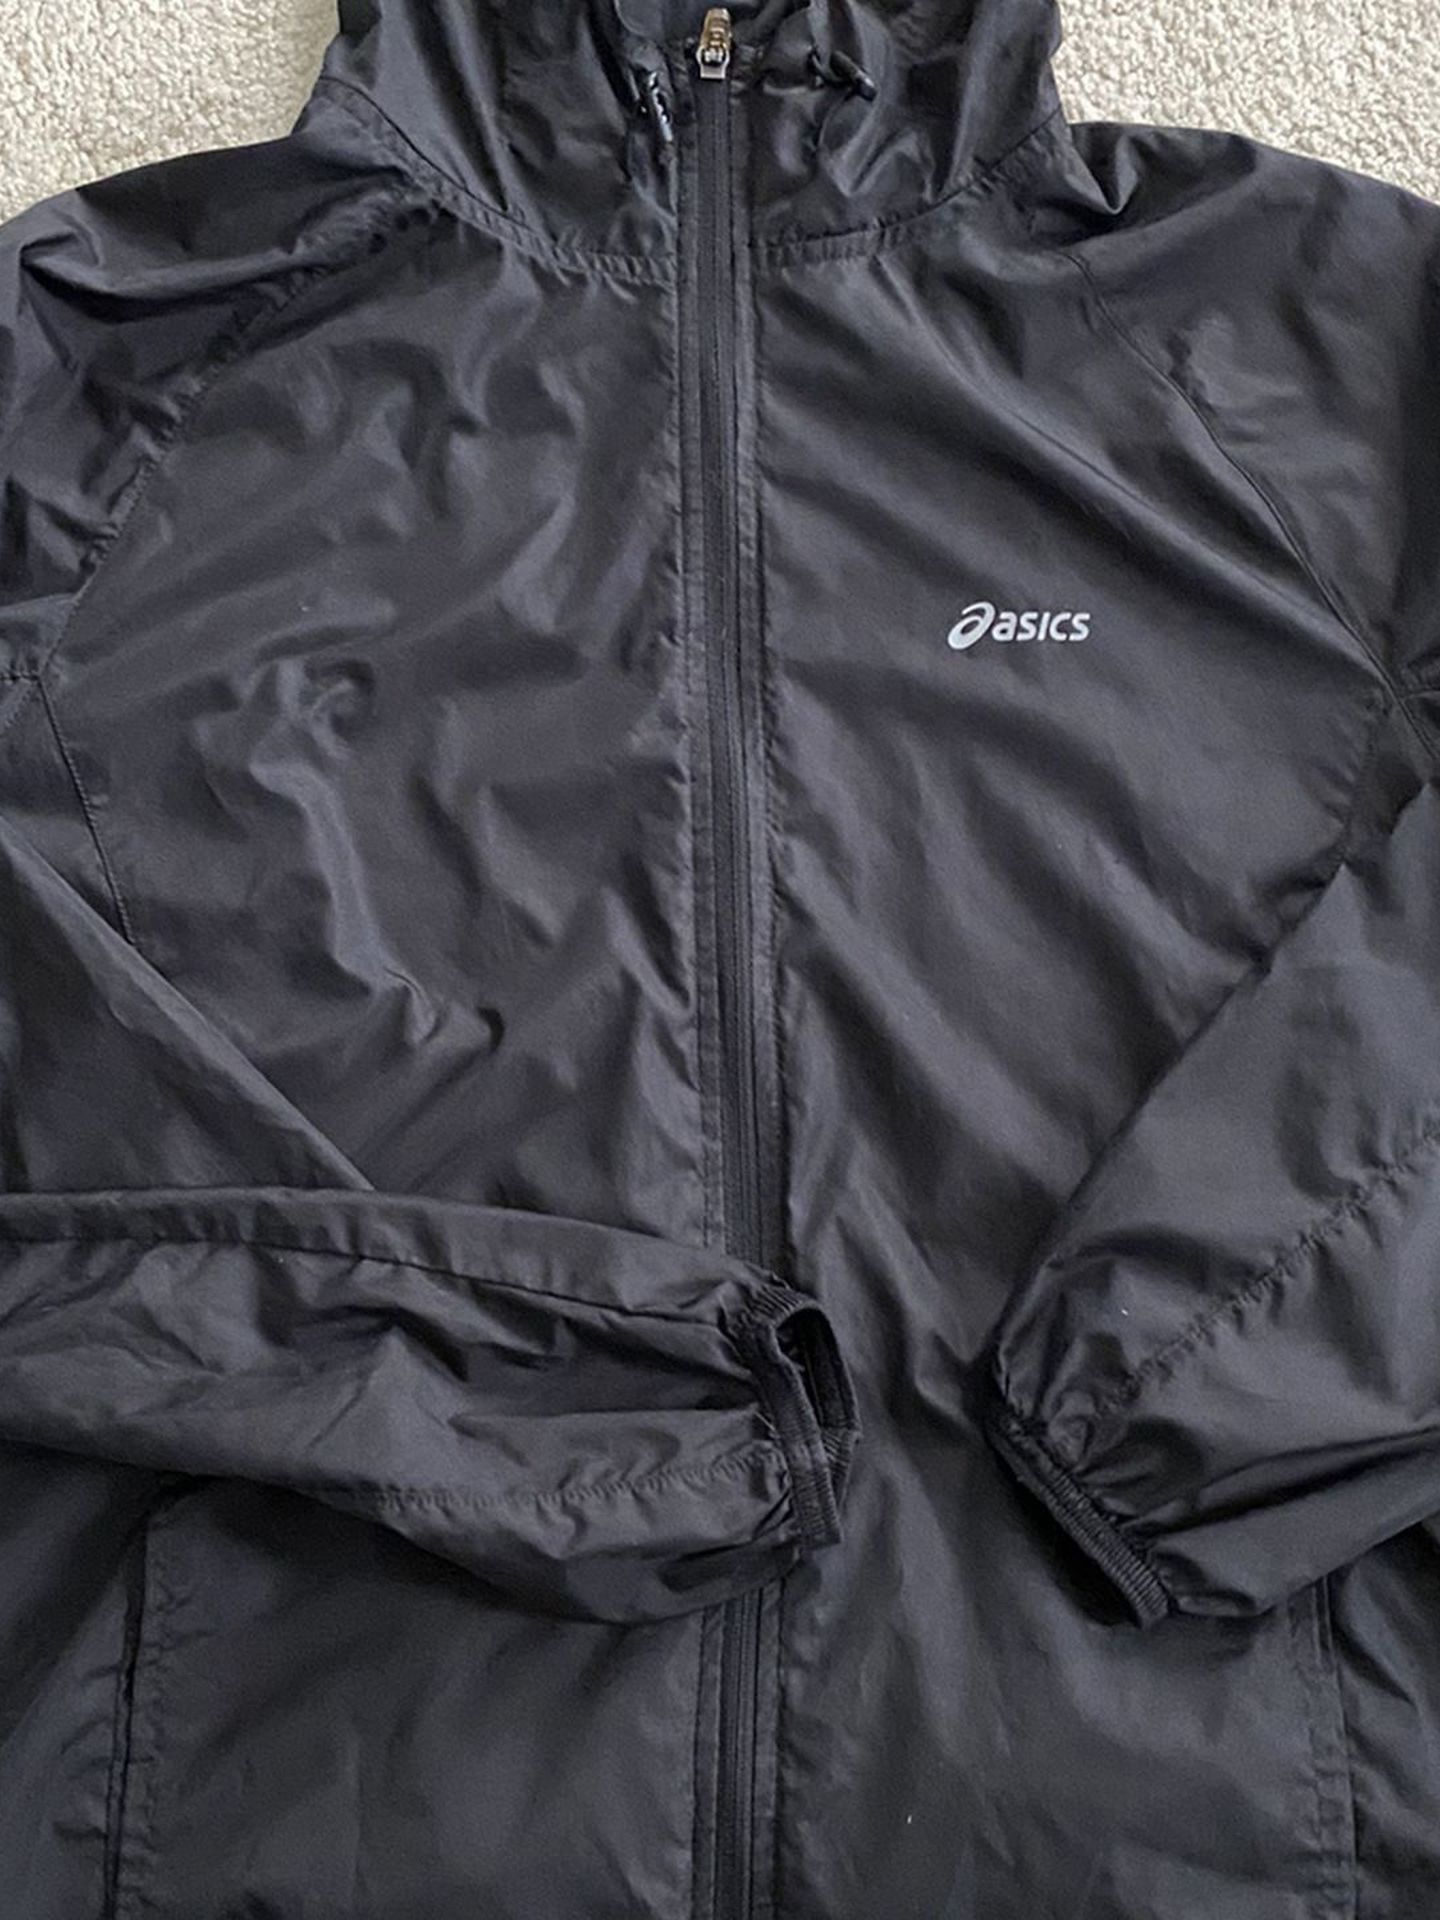 ASICS Black Foldable Rain Jacket/Windbreaker Size M